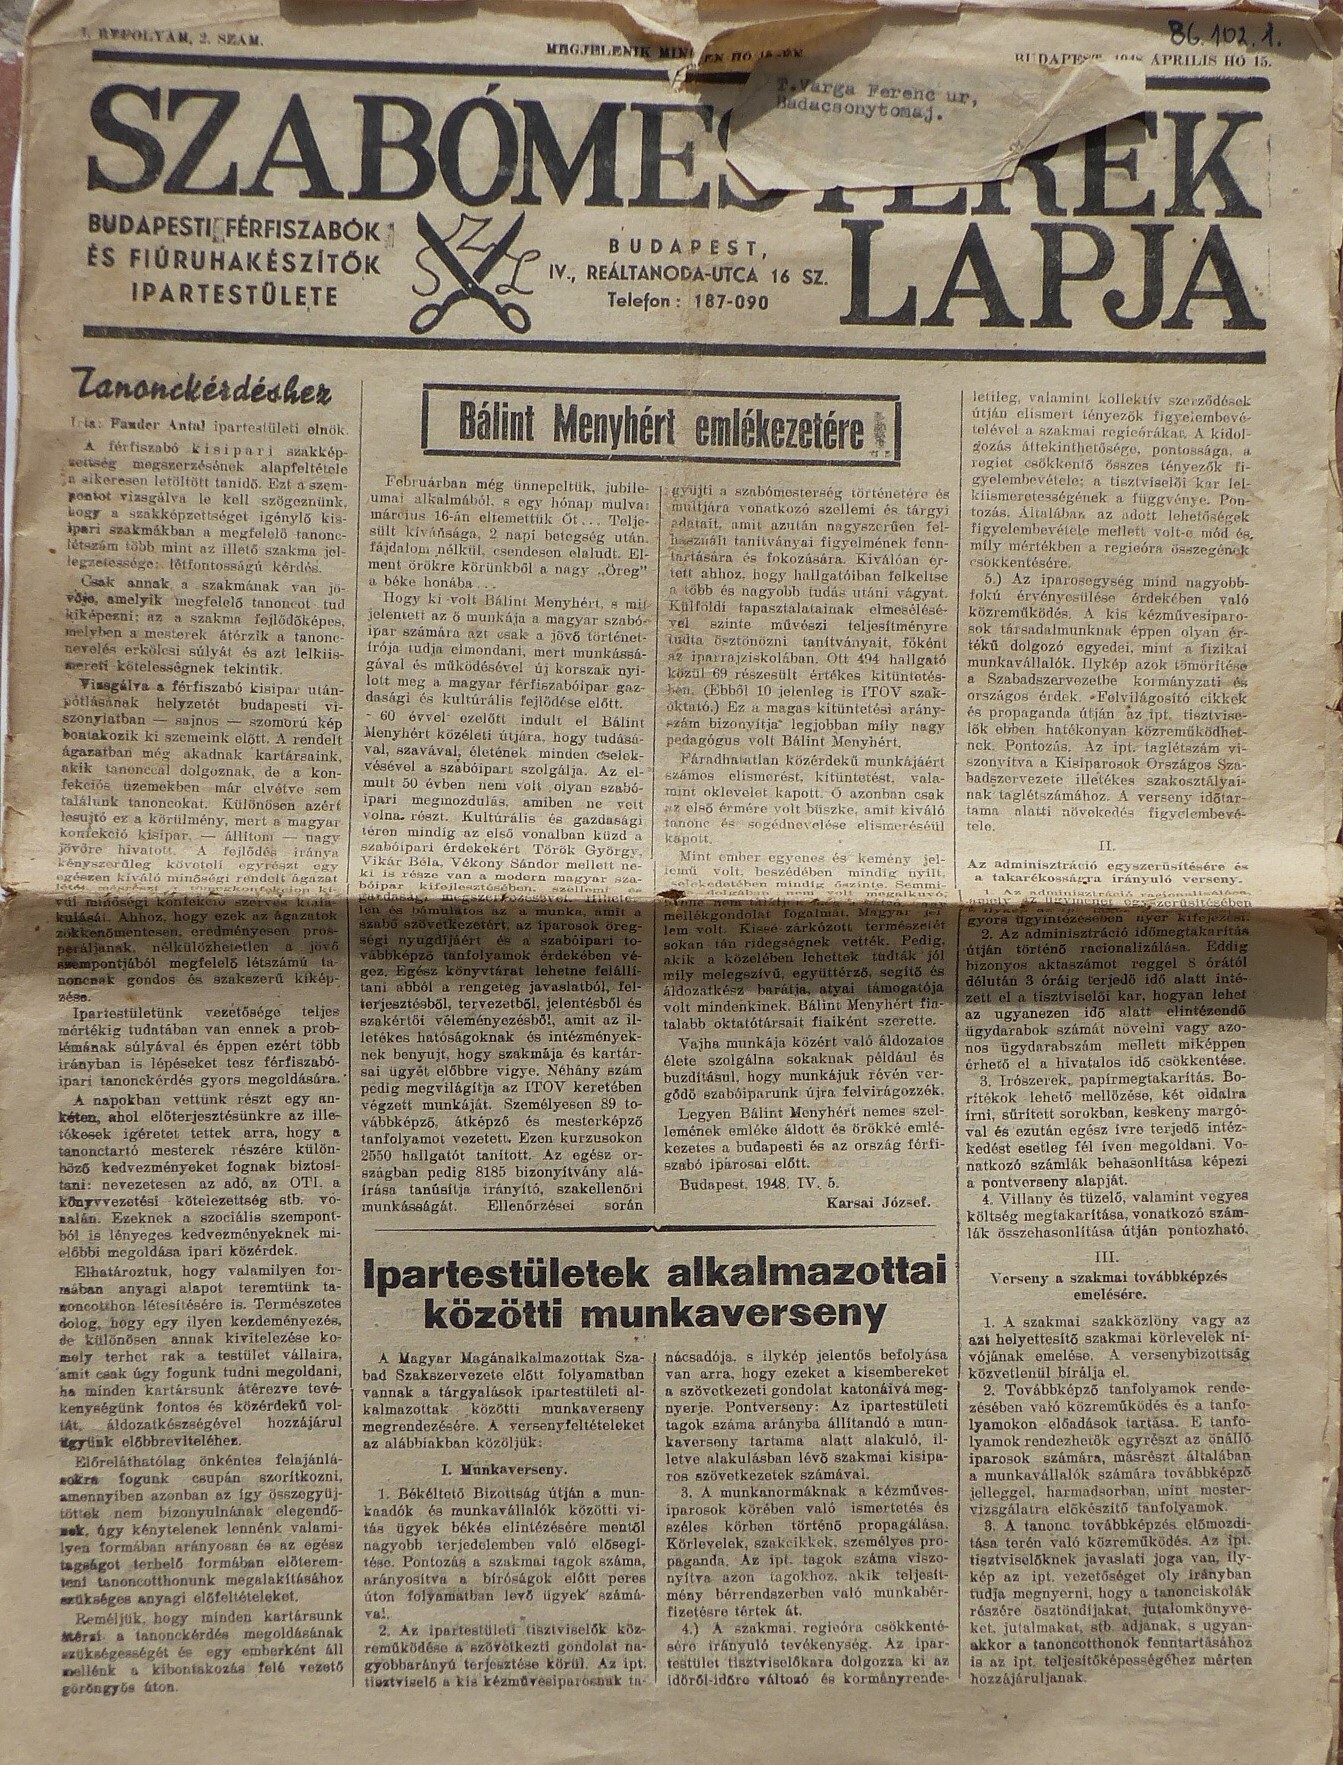 Szabómesterek lapja 1948 április (Tapolcai Városi Múzeum CC BY-NC-SA)